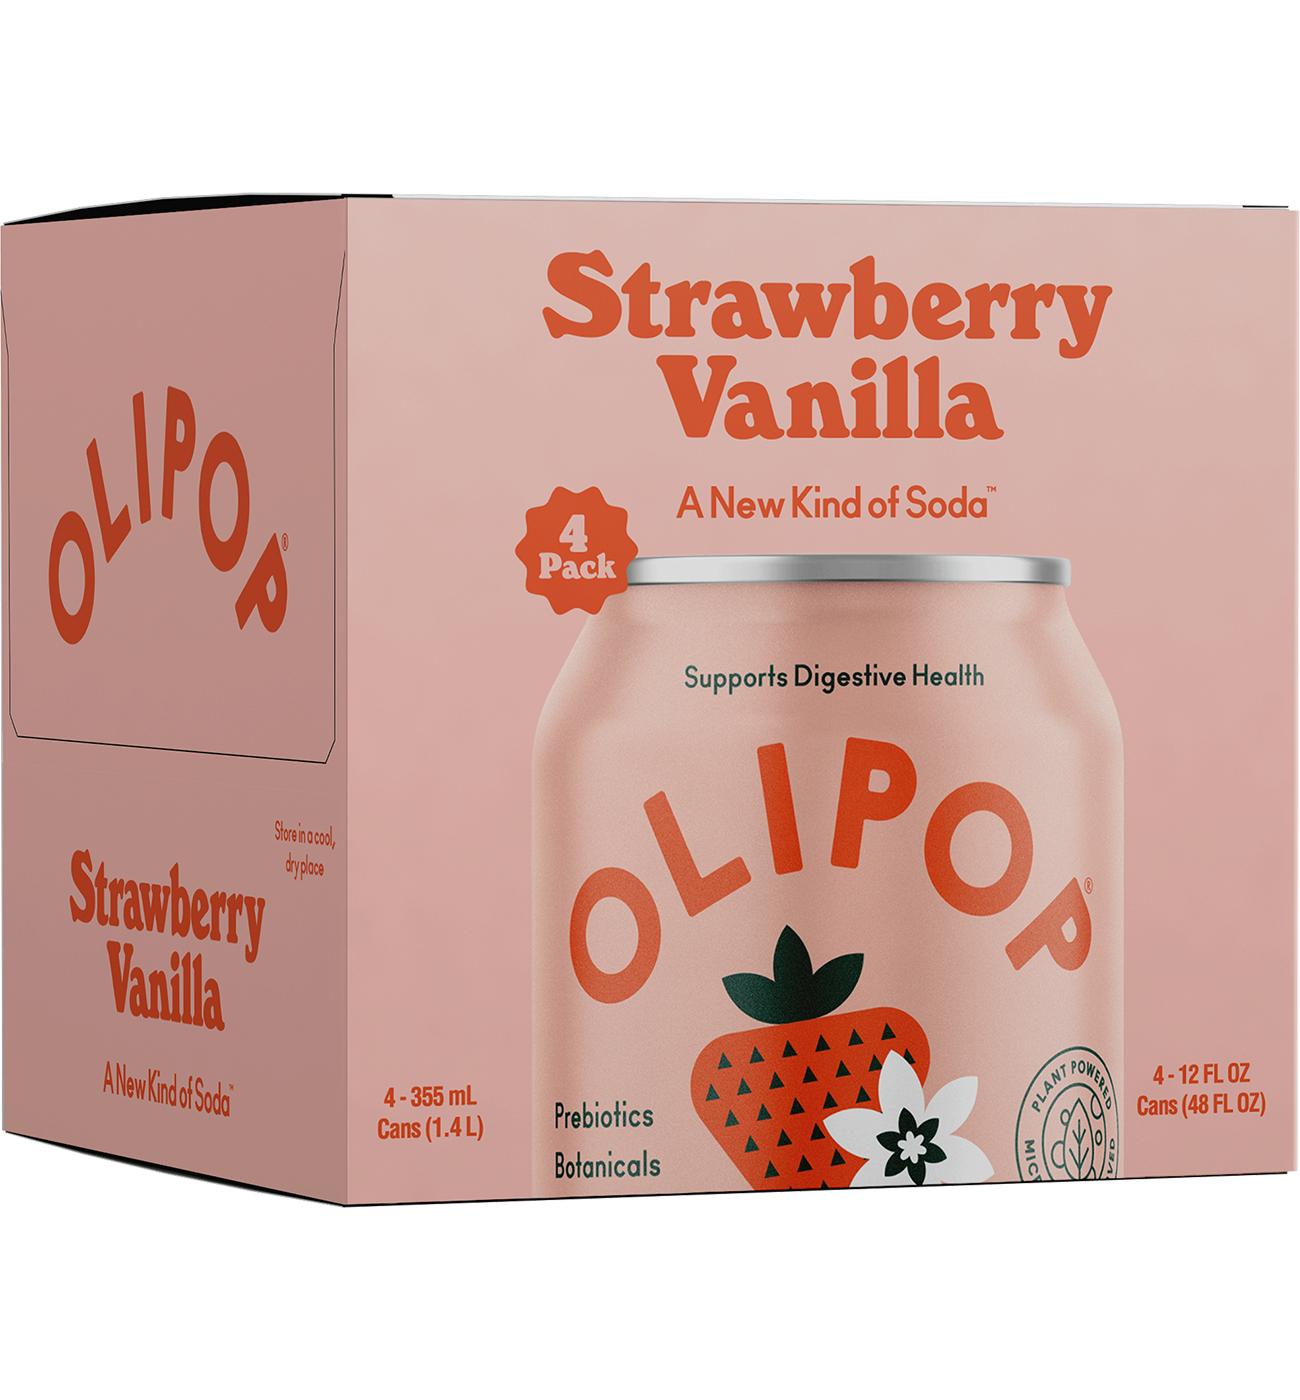 Olipop Prebiotic Strawberry Vanilla Soda 4 pk Cans; image 1 of 2